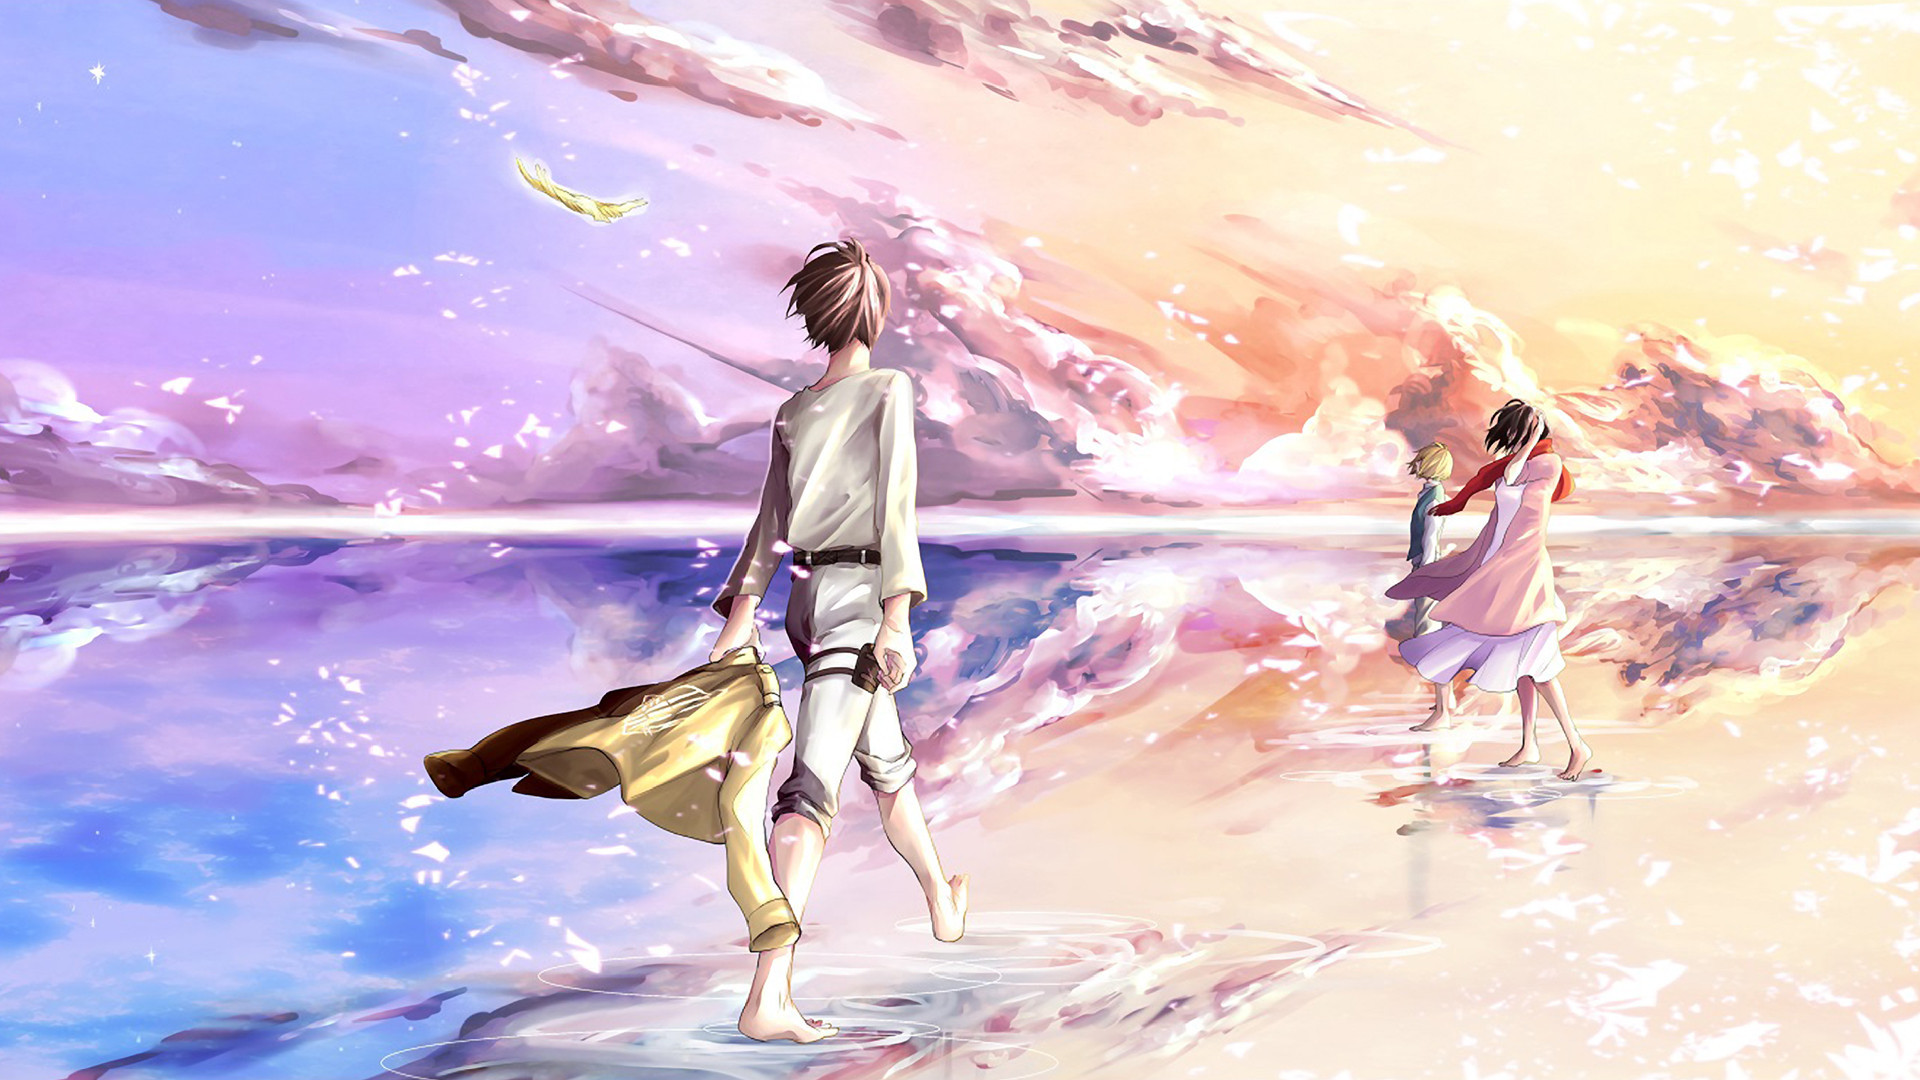 1920x1080 Shingeki no Kyojin Â» Fanart Â» Wallpaper | Pastel cloudy skies | #eren  #armin #mikasa | Shingeki no Kyojin | Pinterest | Armin, Fanart and Anime